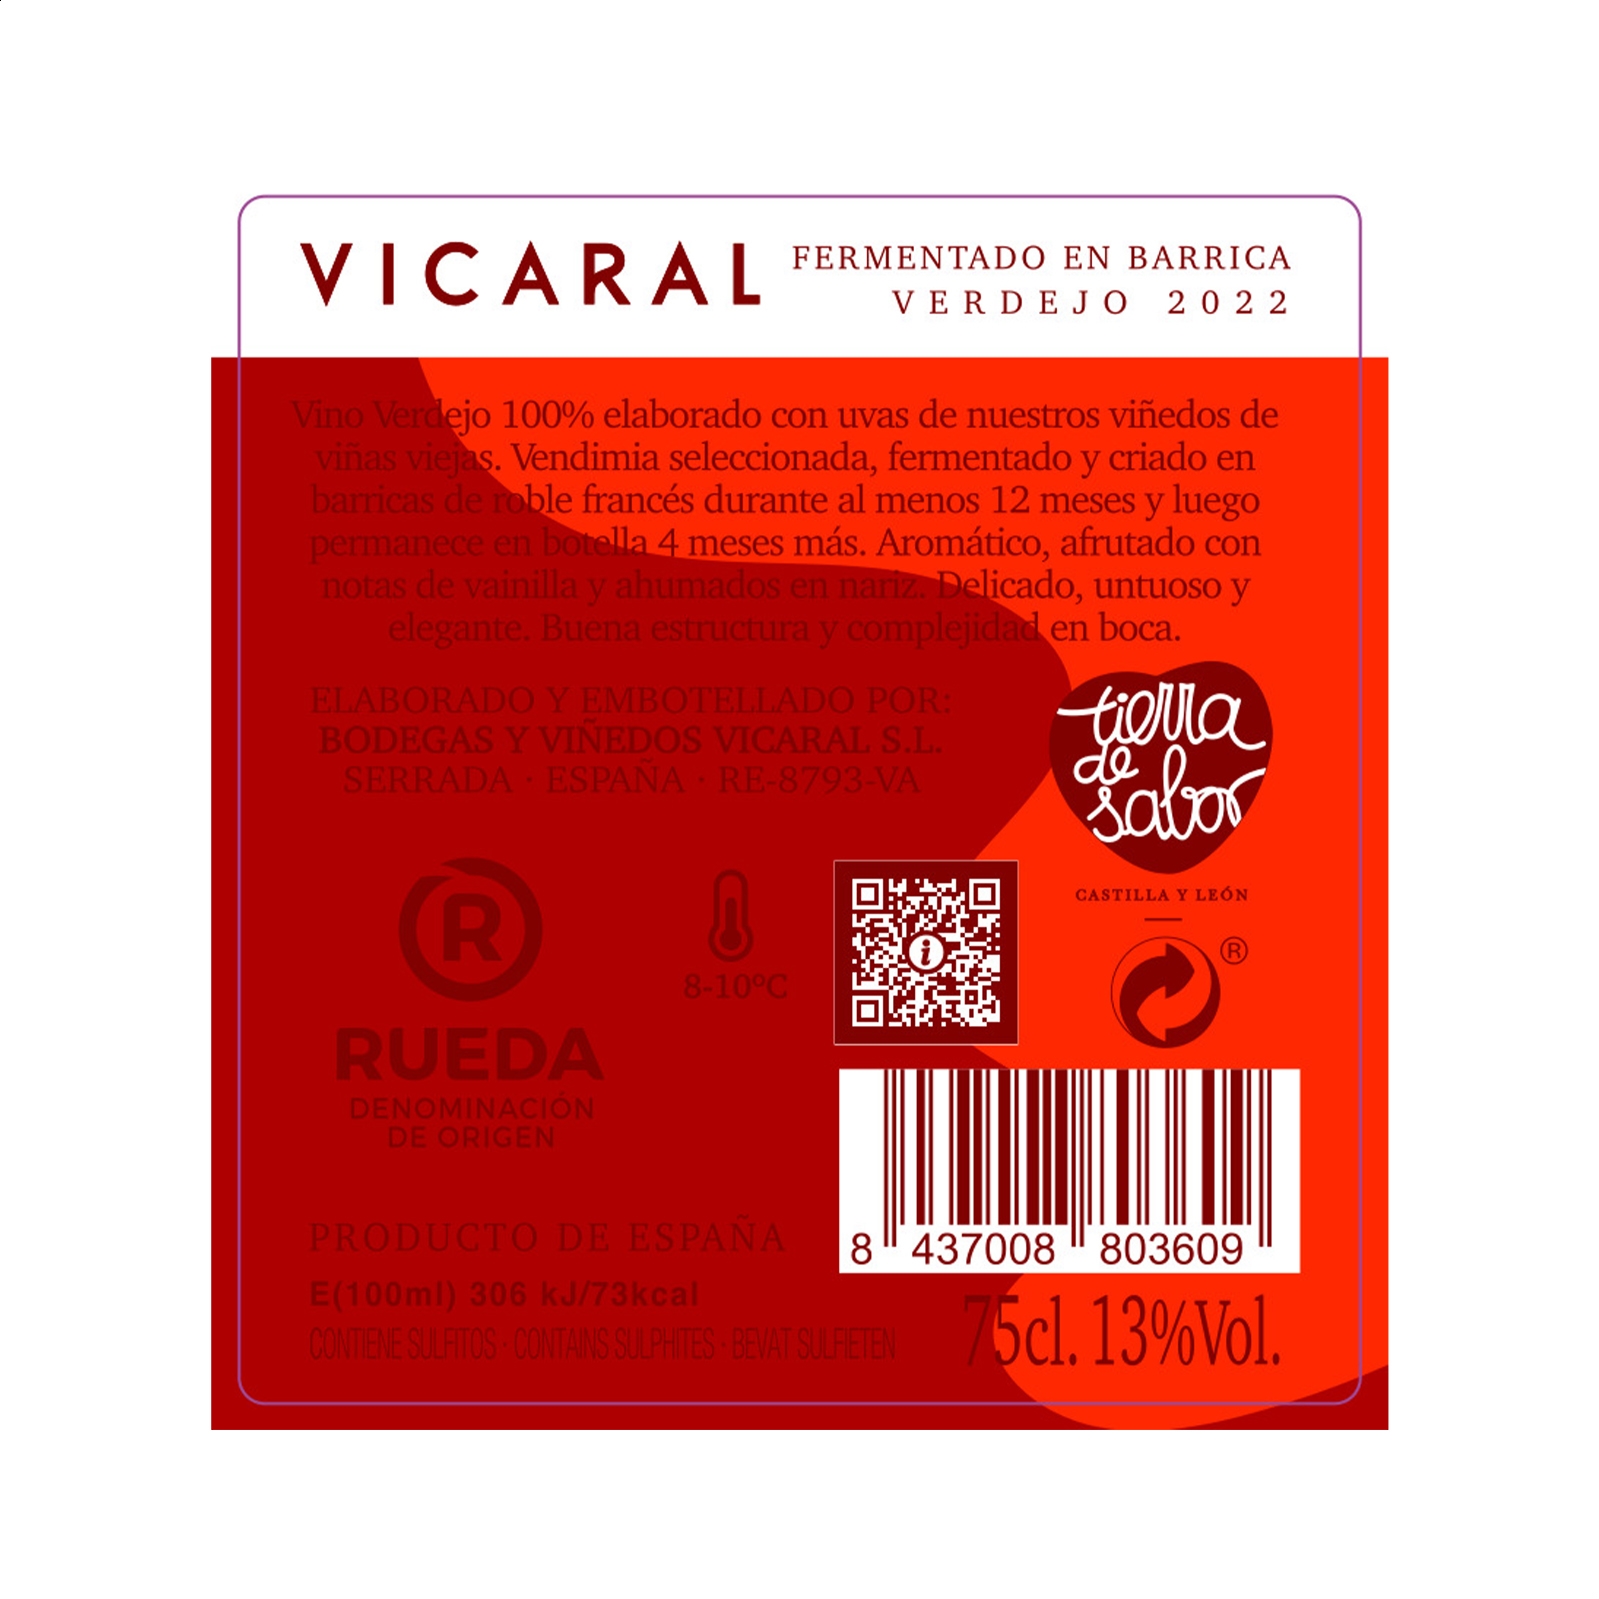 Bodegas y Viñedos Vicaral - Vino blanco D.O. Rueda 75cl, 6uds